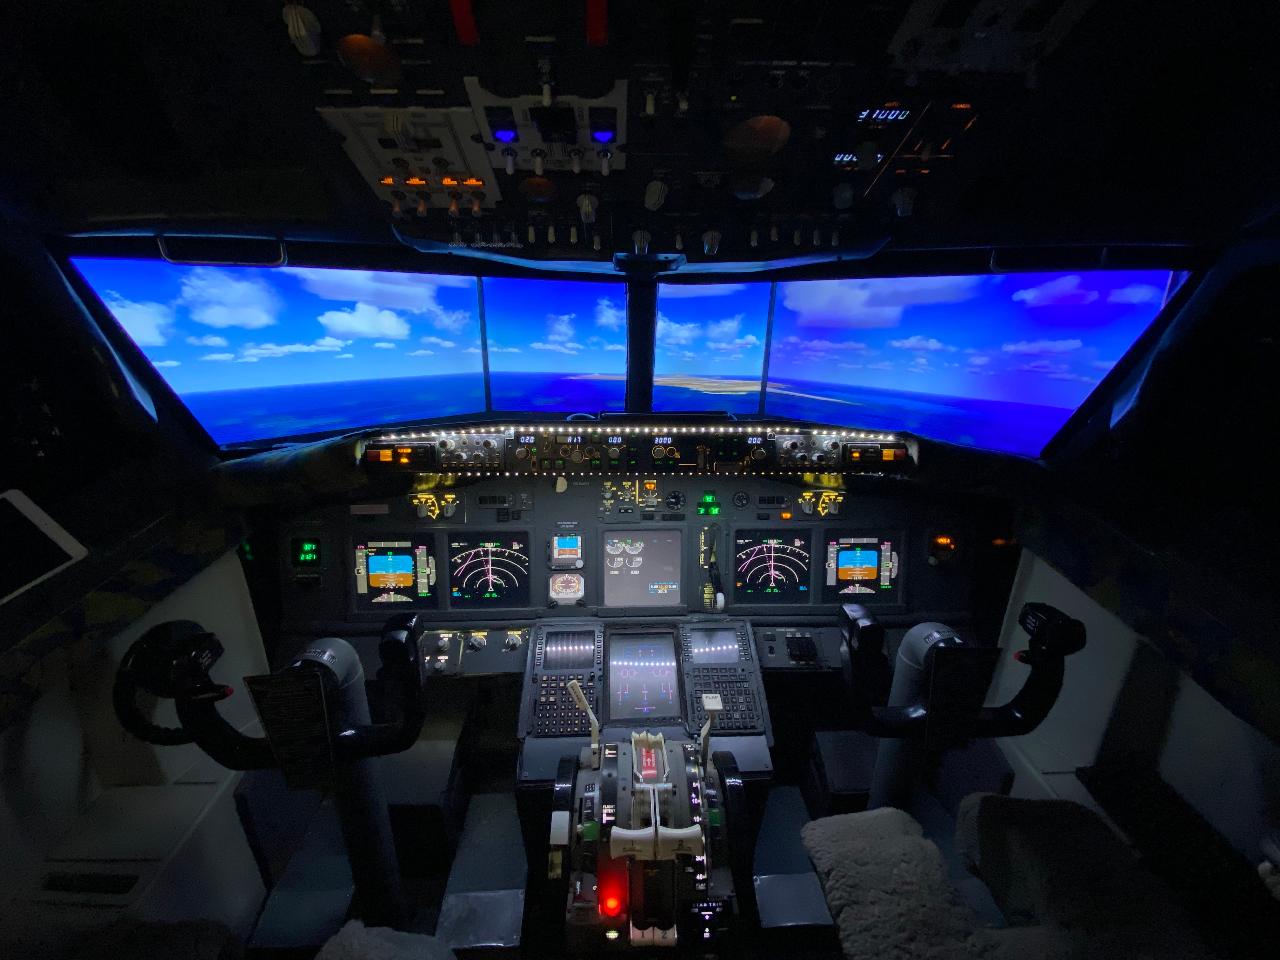 90 min Flight Simulation Experience: “I got this”